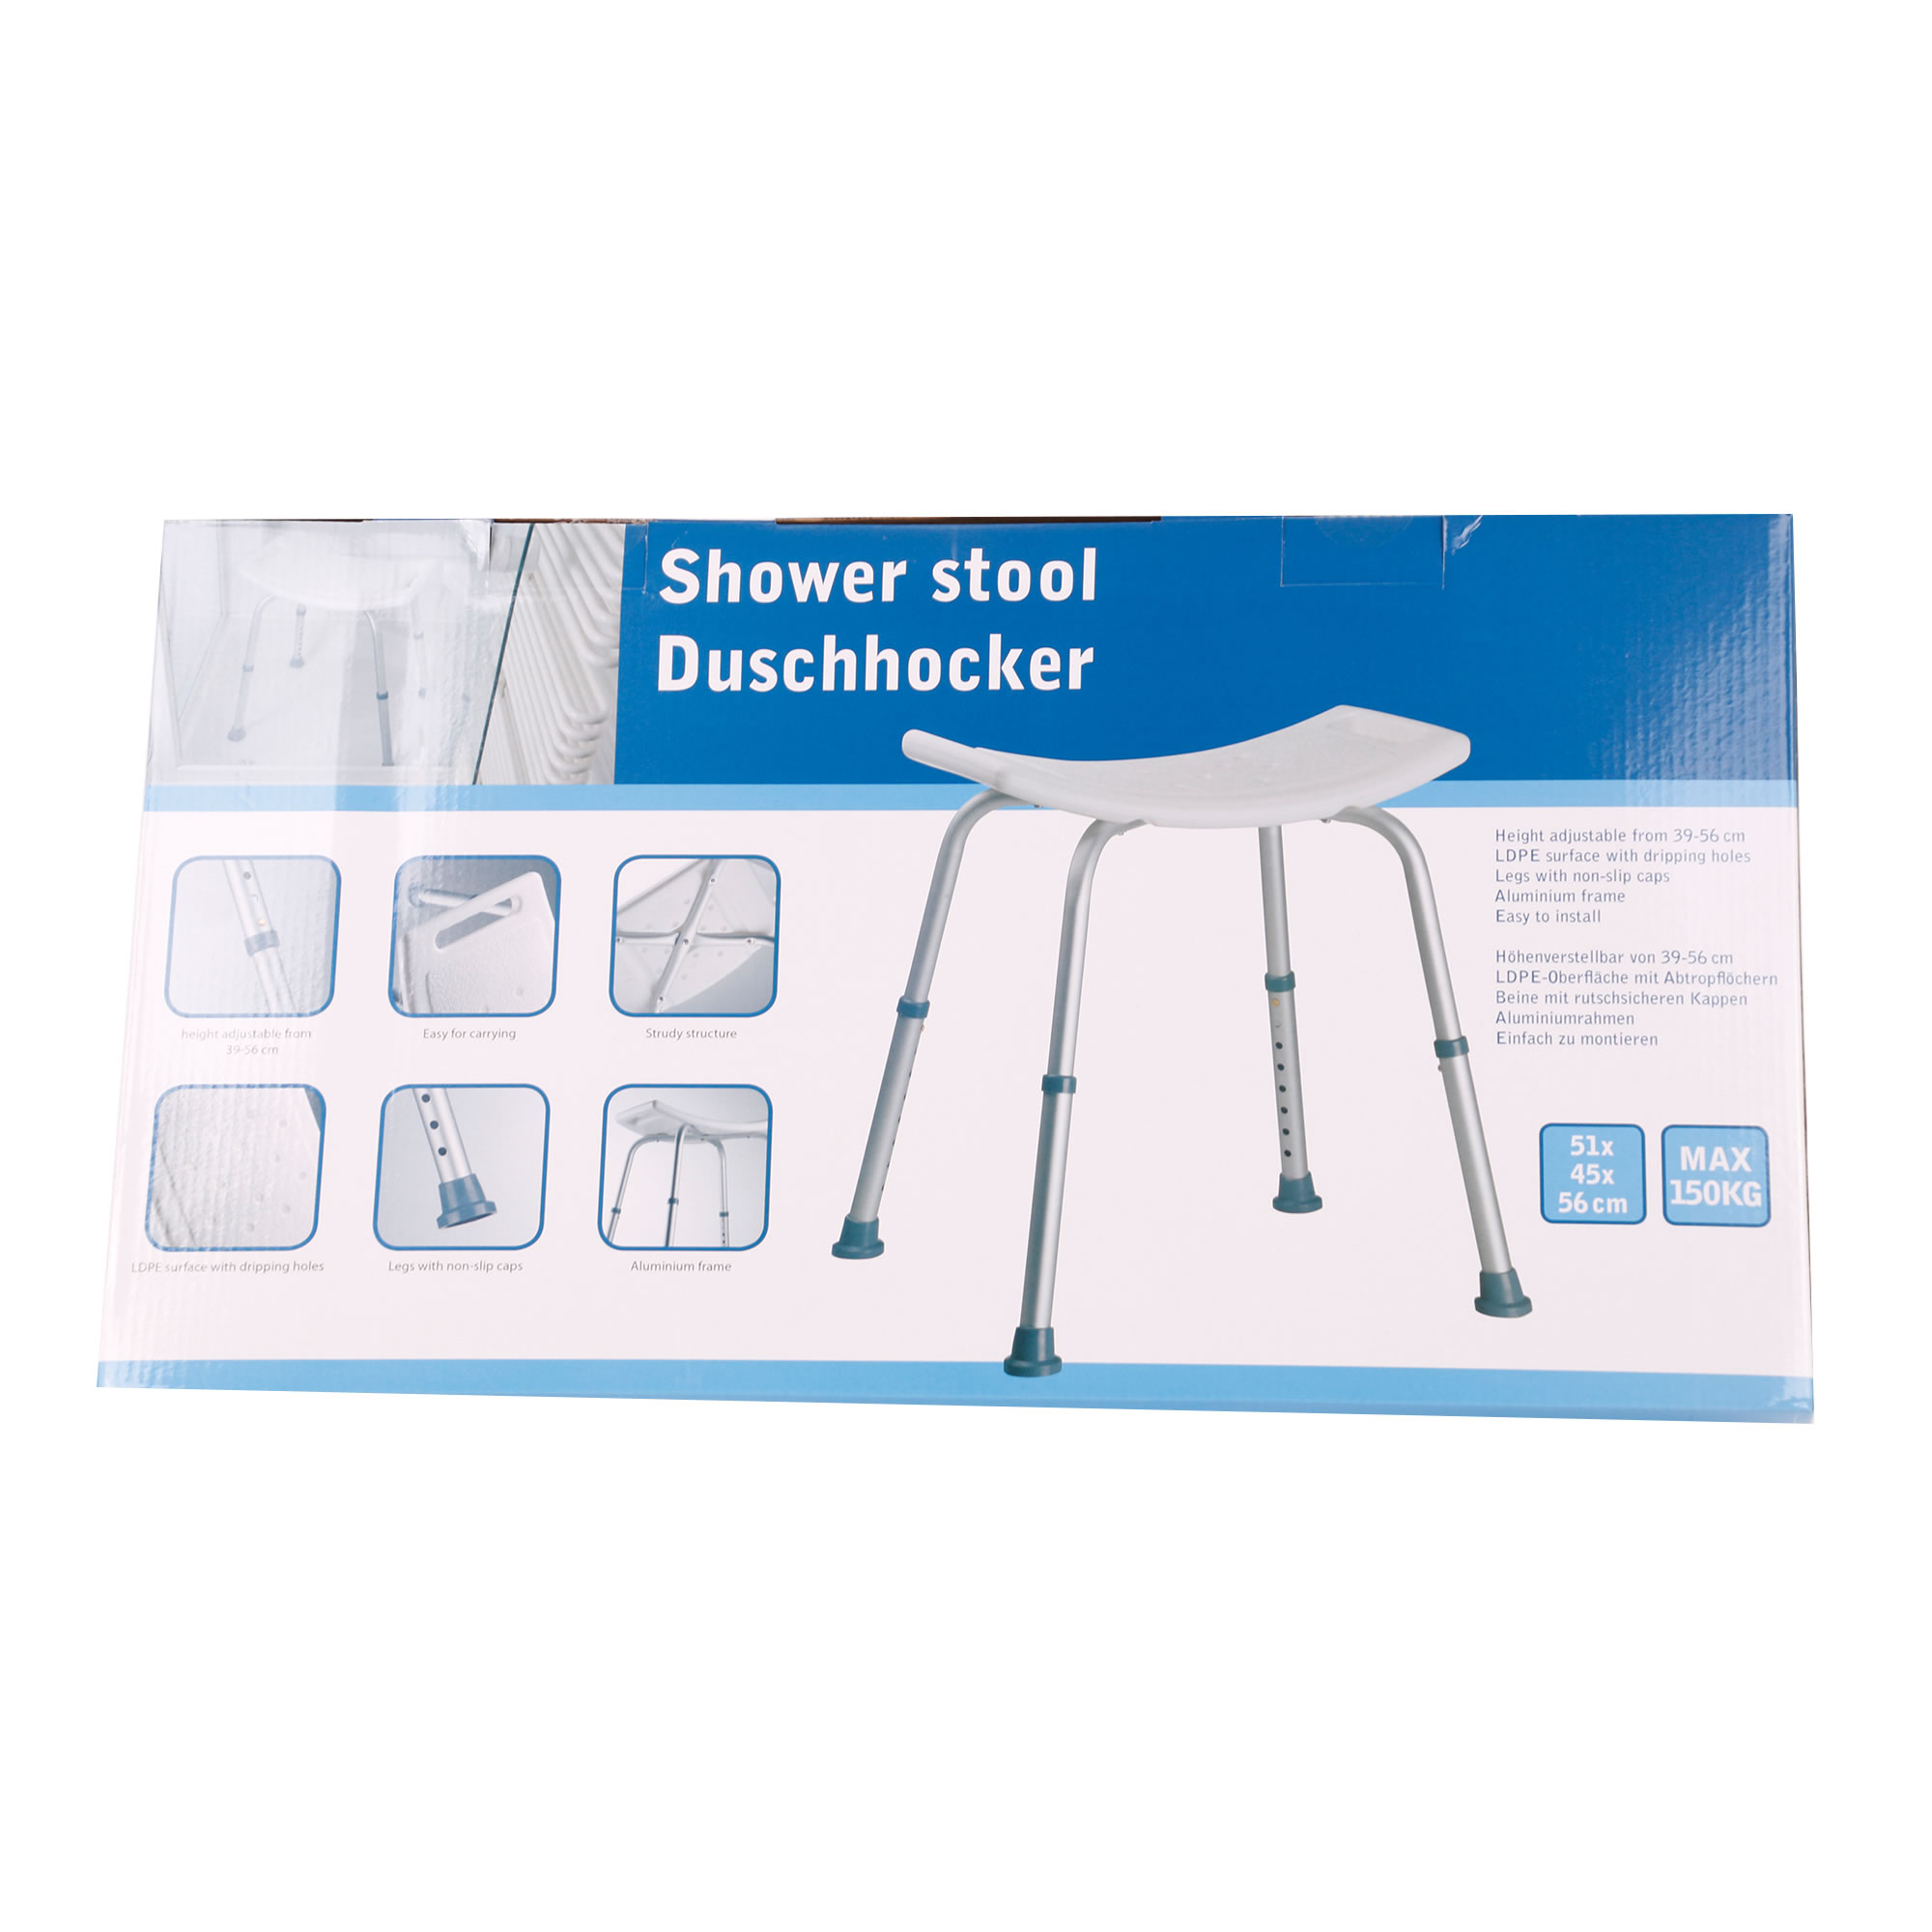 Homestyle 25742 Duschhocker, Plastik, weiß/aluminium, 51.0 x 45.0 x 56.0 cm